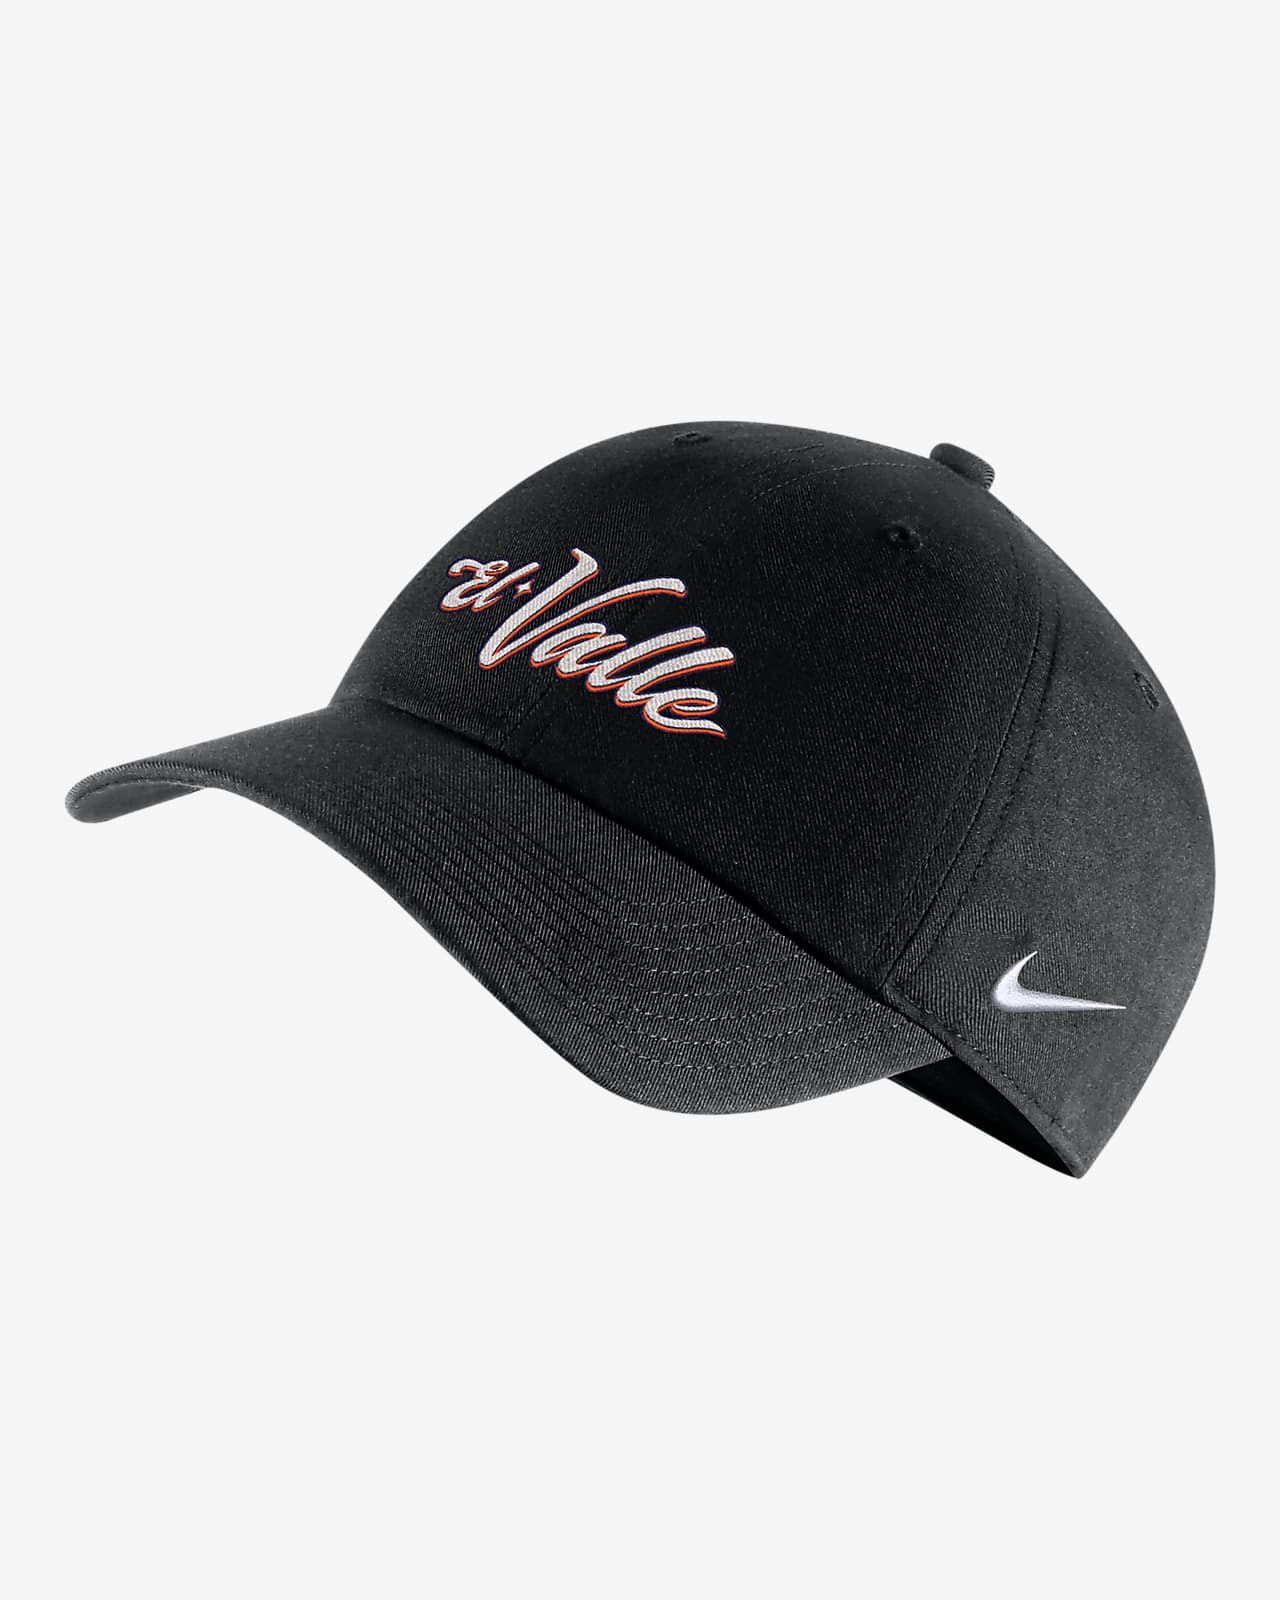 Phoenix Suns City Edition Nike NBA Adjustable Cap